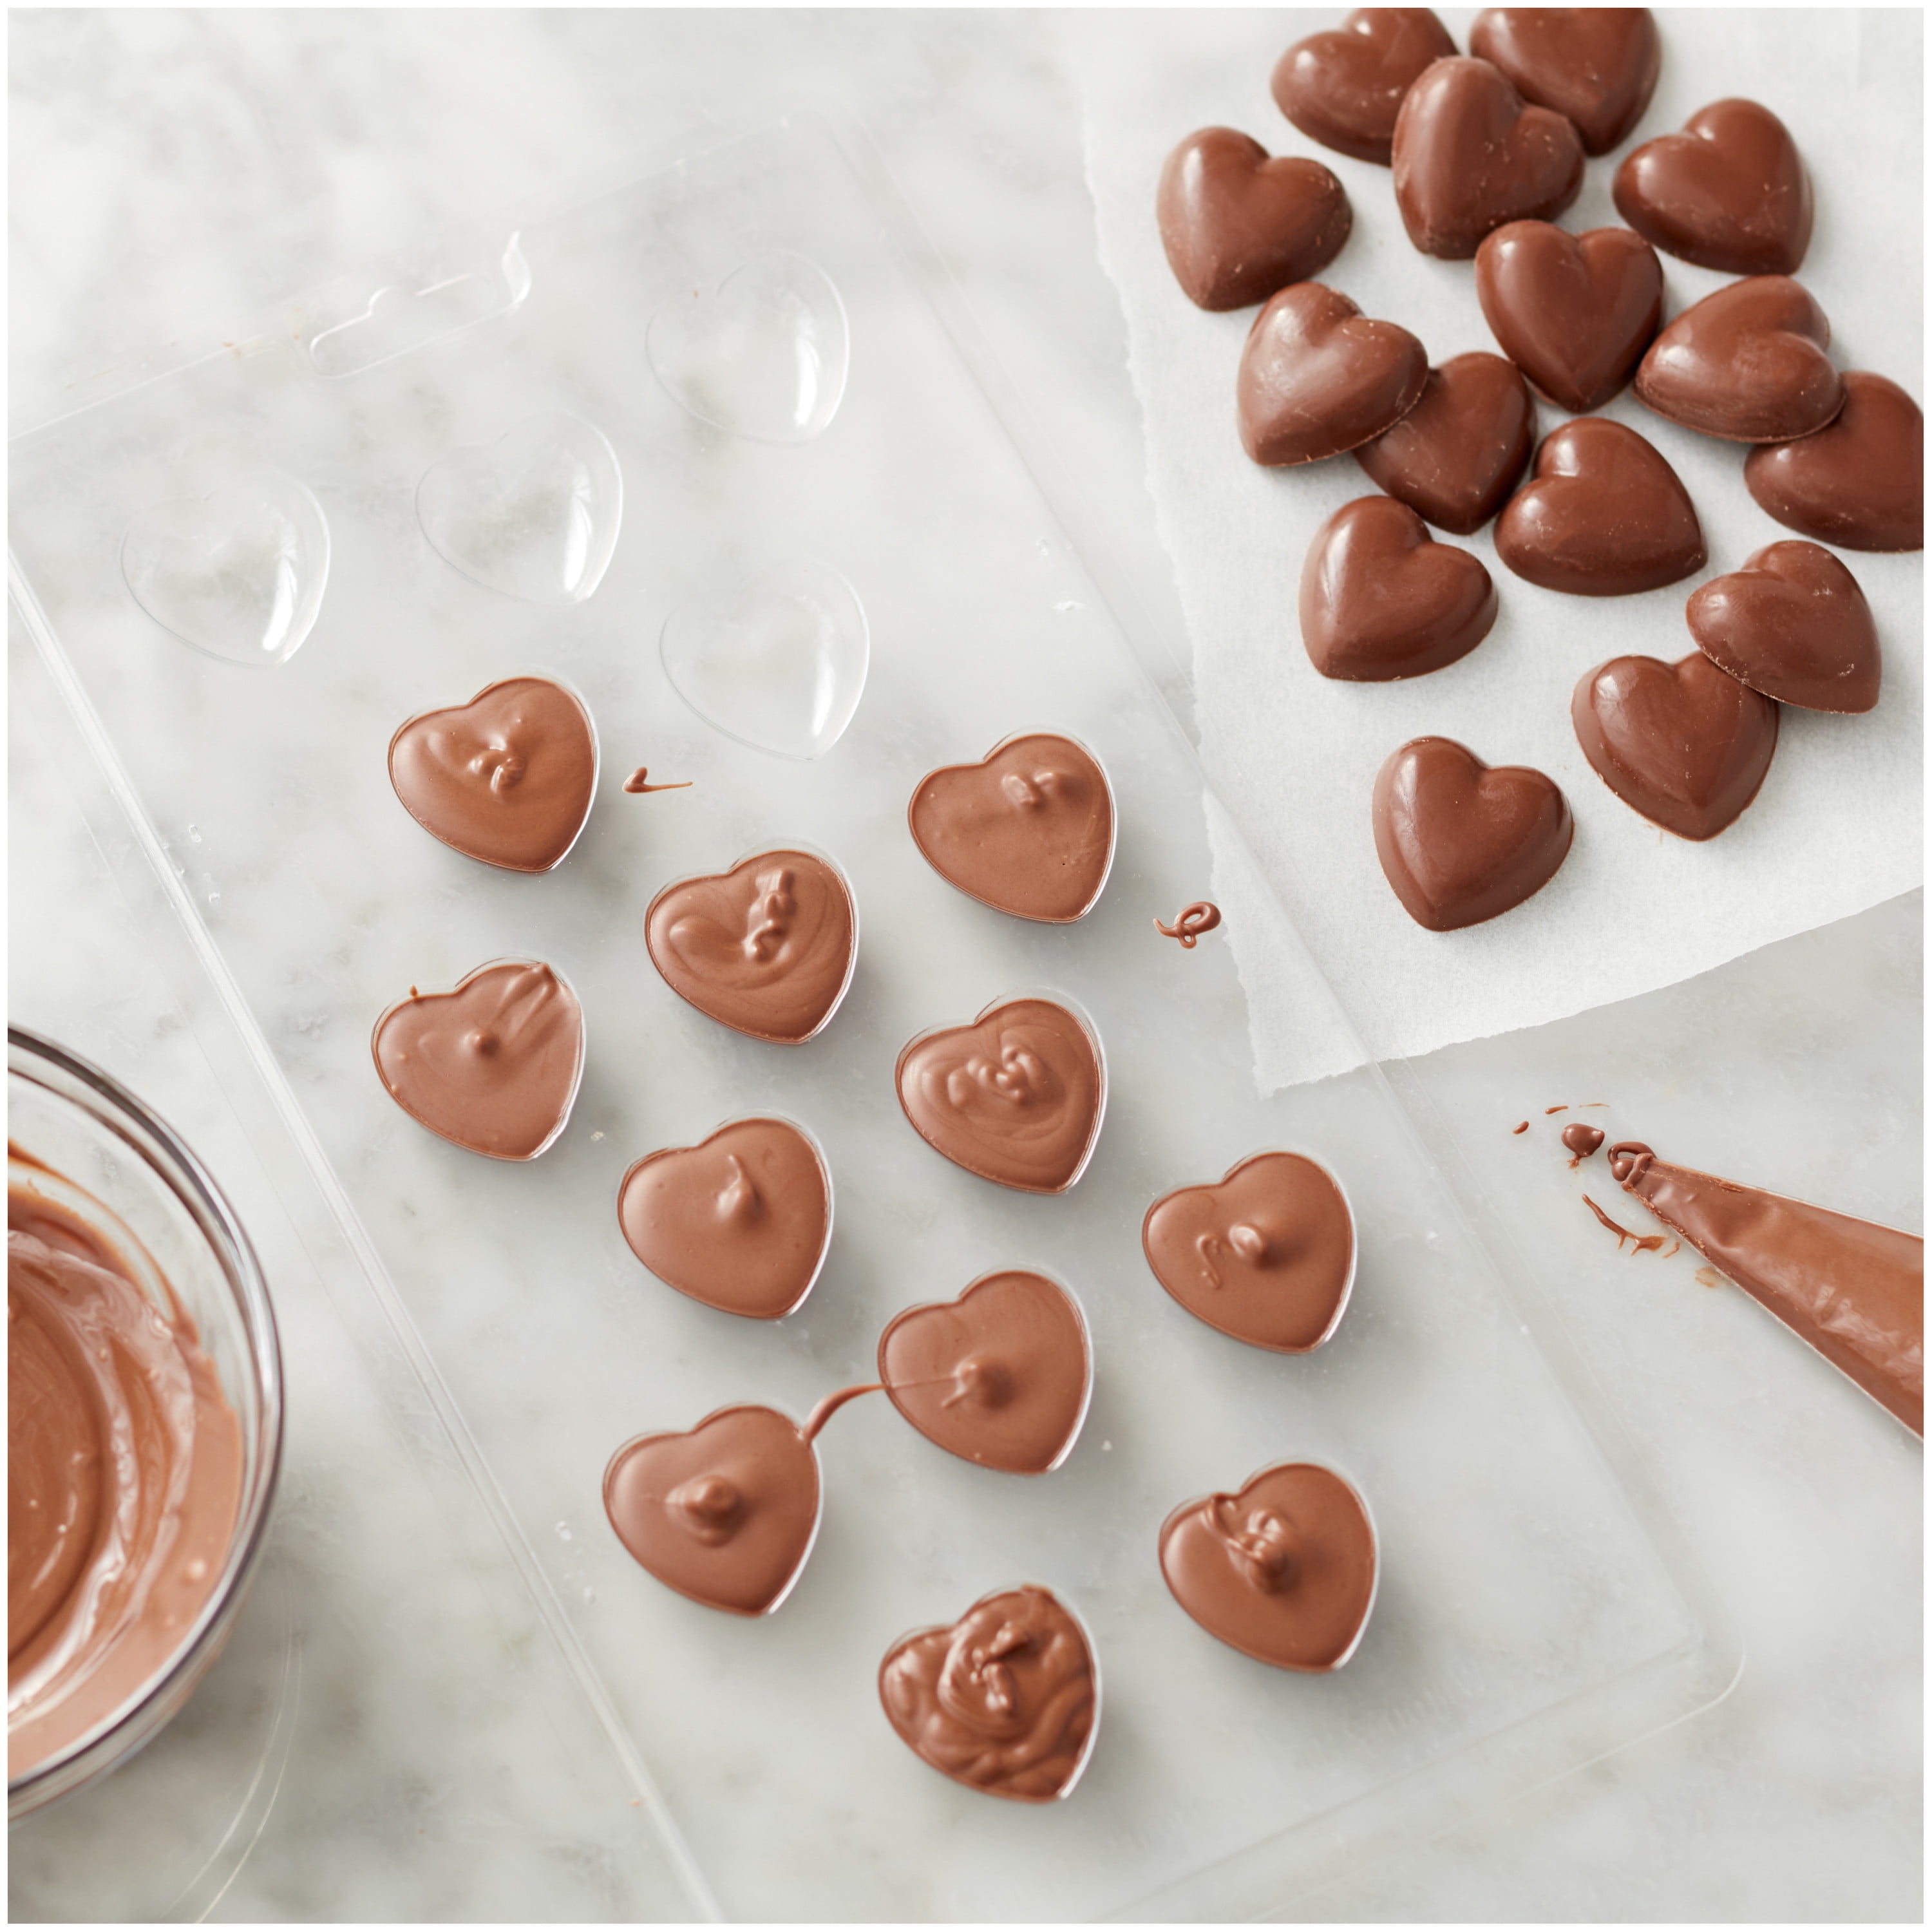 15 Holes Love Heart Shaped Silicone moldChocolate Mold Reusa